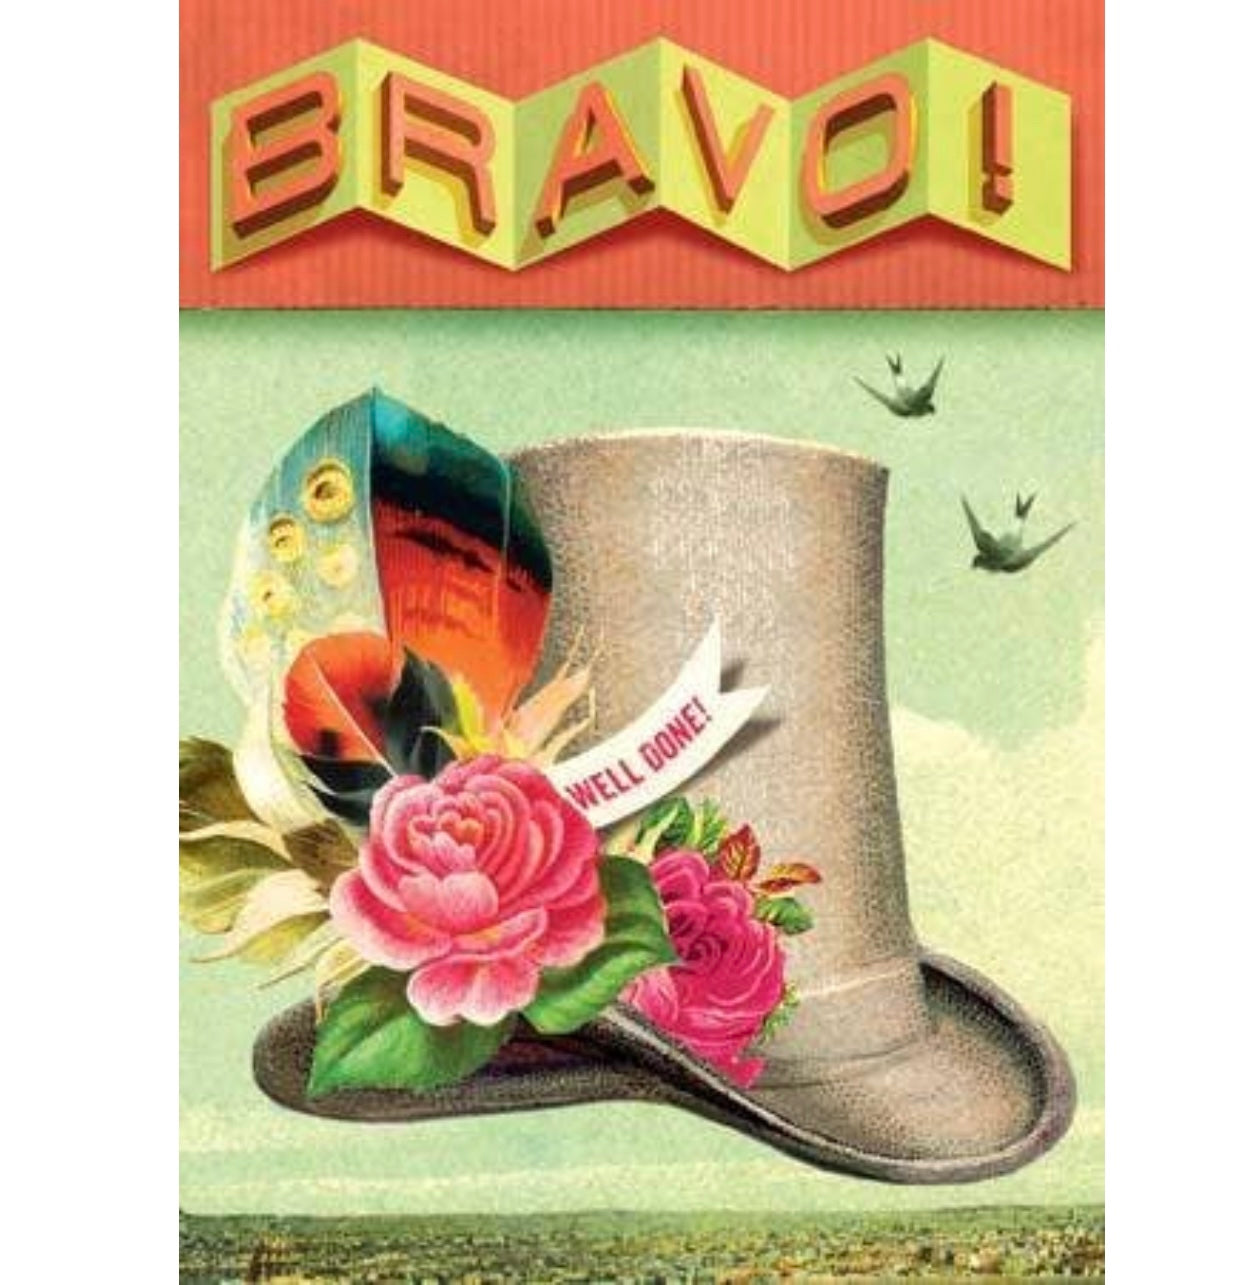 Bravo : greeting card